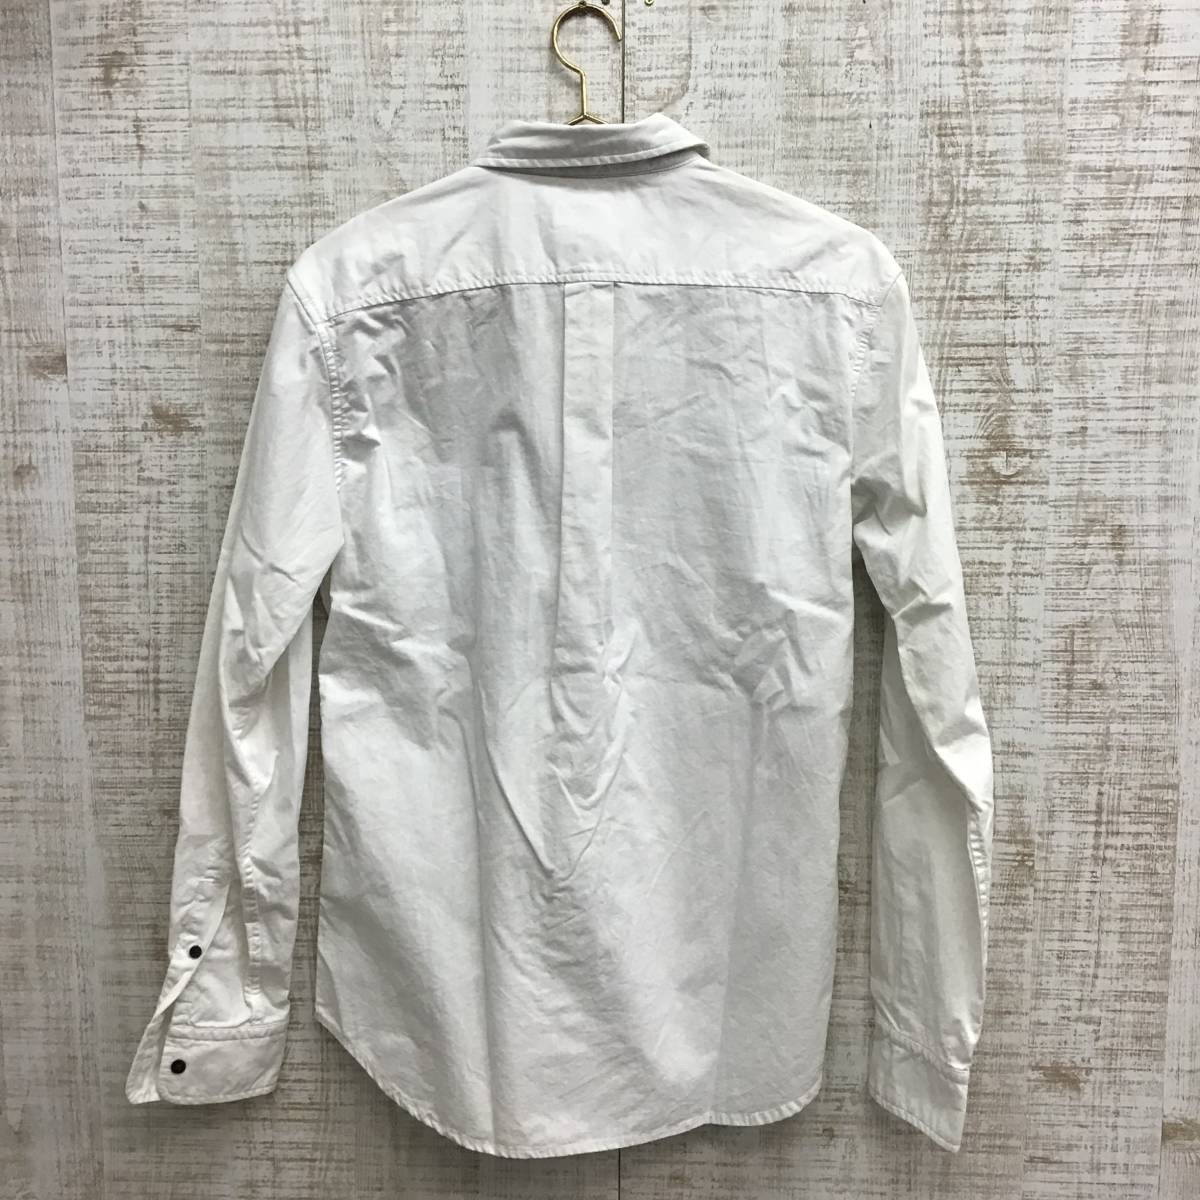 A528*TAKEO KIKUCHIl Takeo Kikuchi unused goods Y shirt white size M